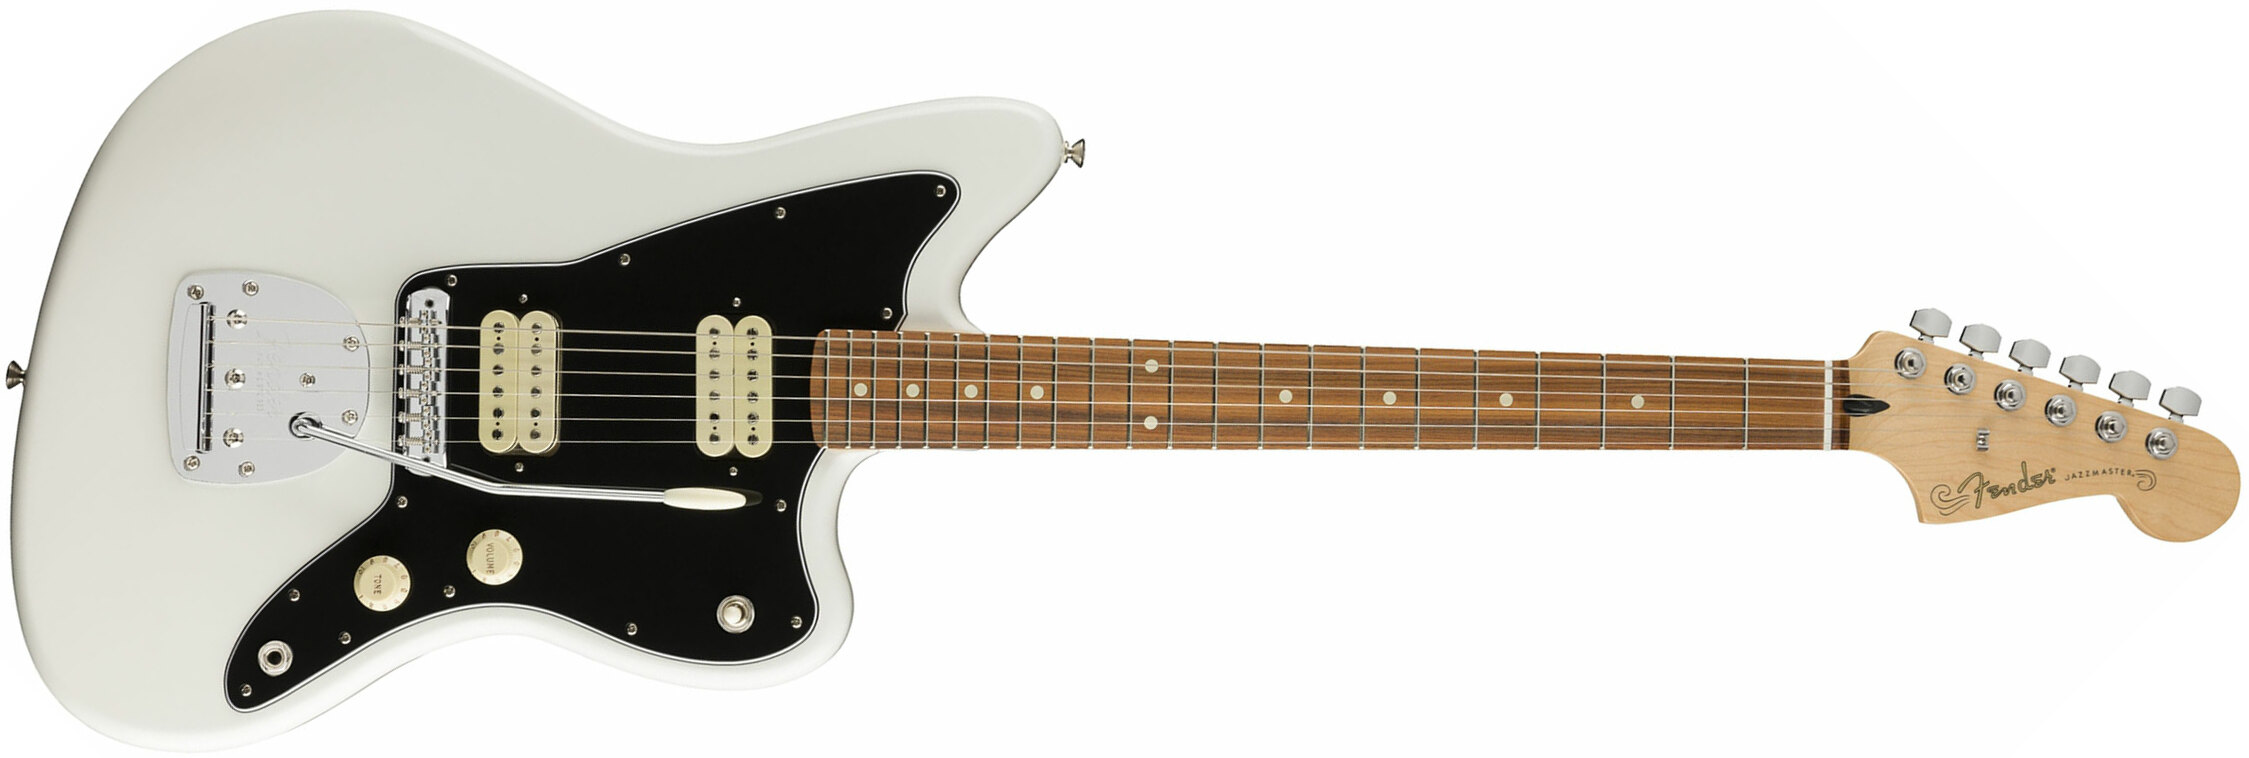 Fender Jazzmaster Player Mex Hh Pf - Polar White - Retro rock electric guitar - Main picture